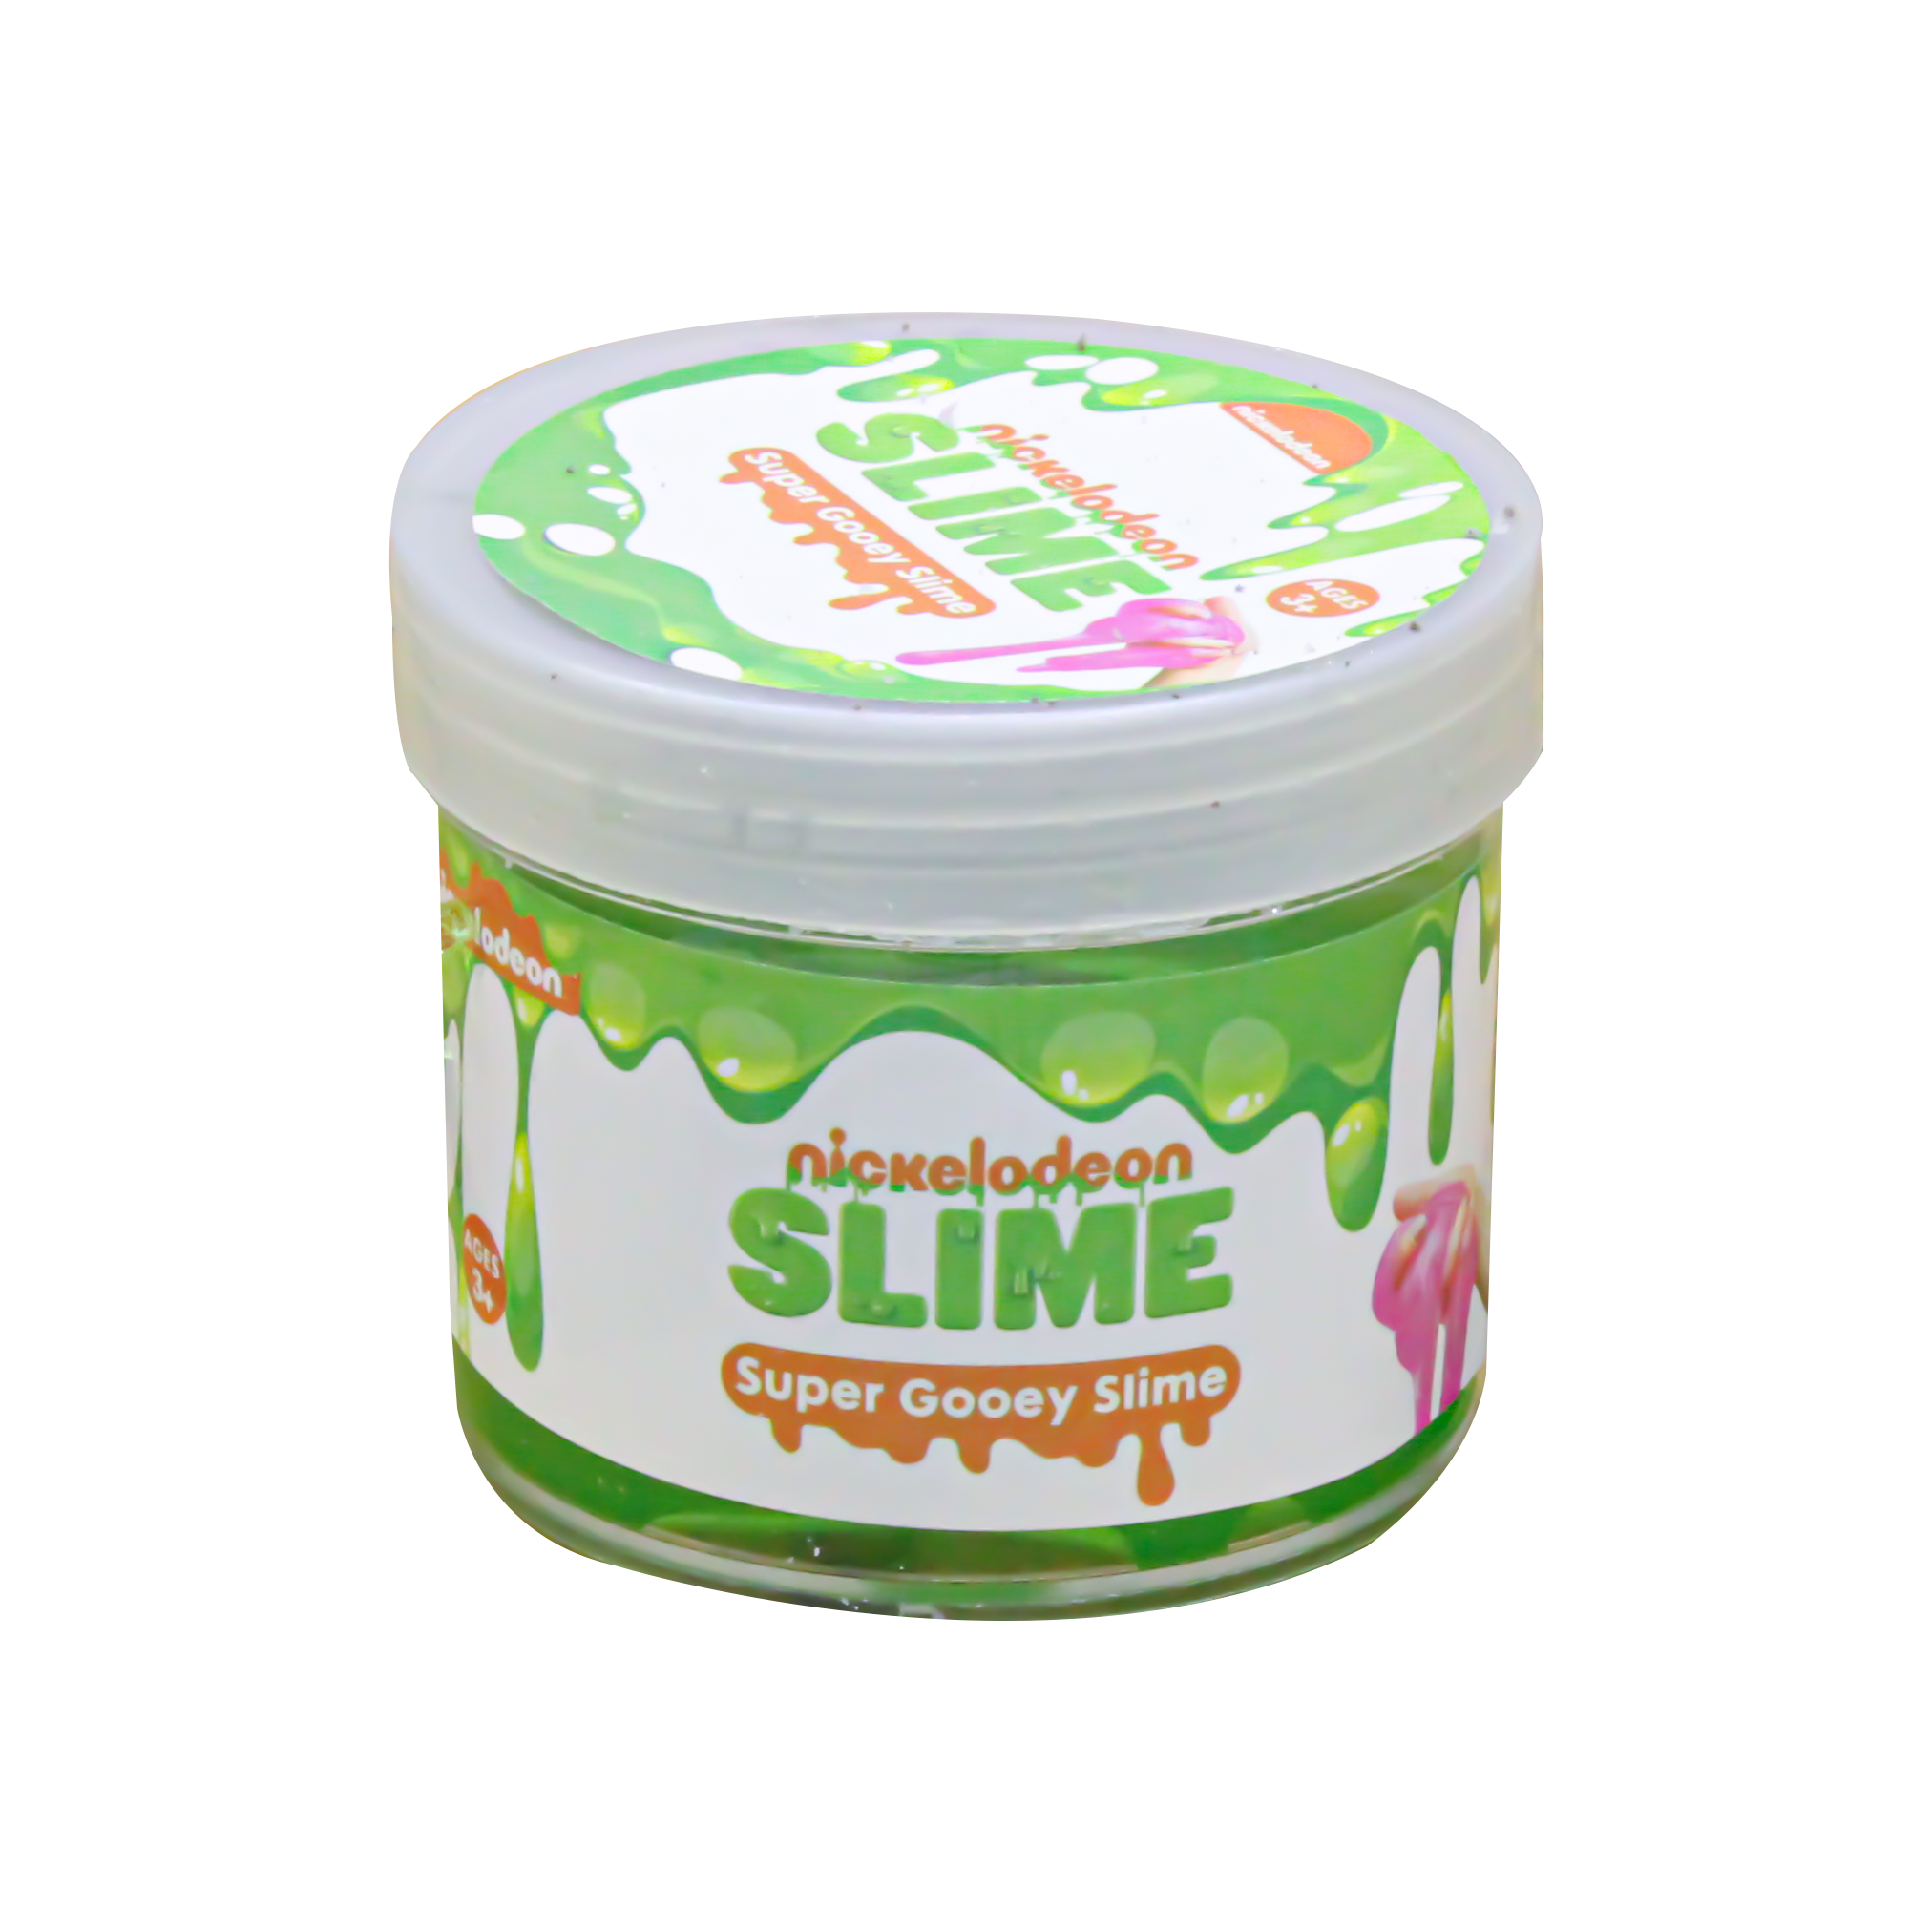 Wow Play Nickelodeon Slime Super Gooey Slime - Green